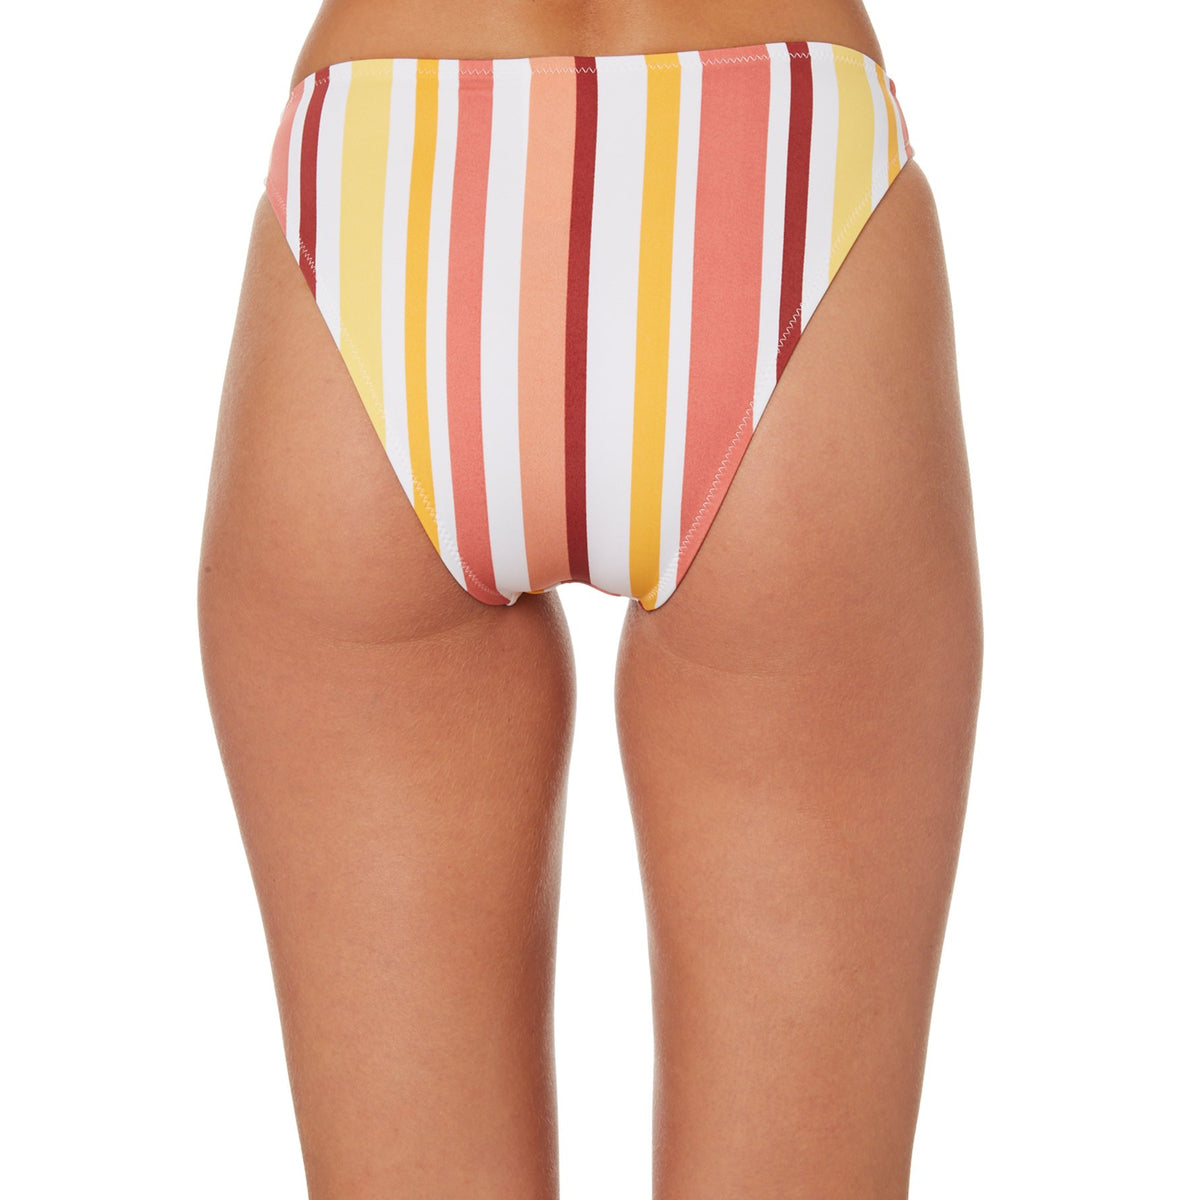 Barbados Midrise Bikini Bottom